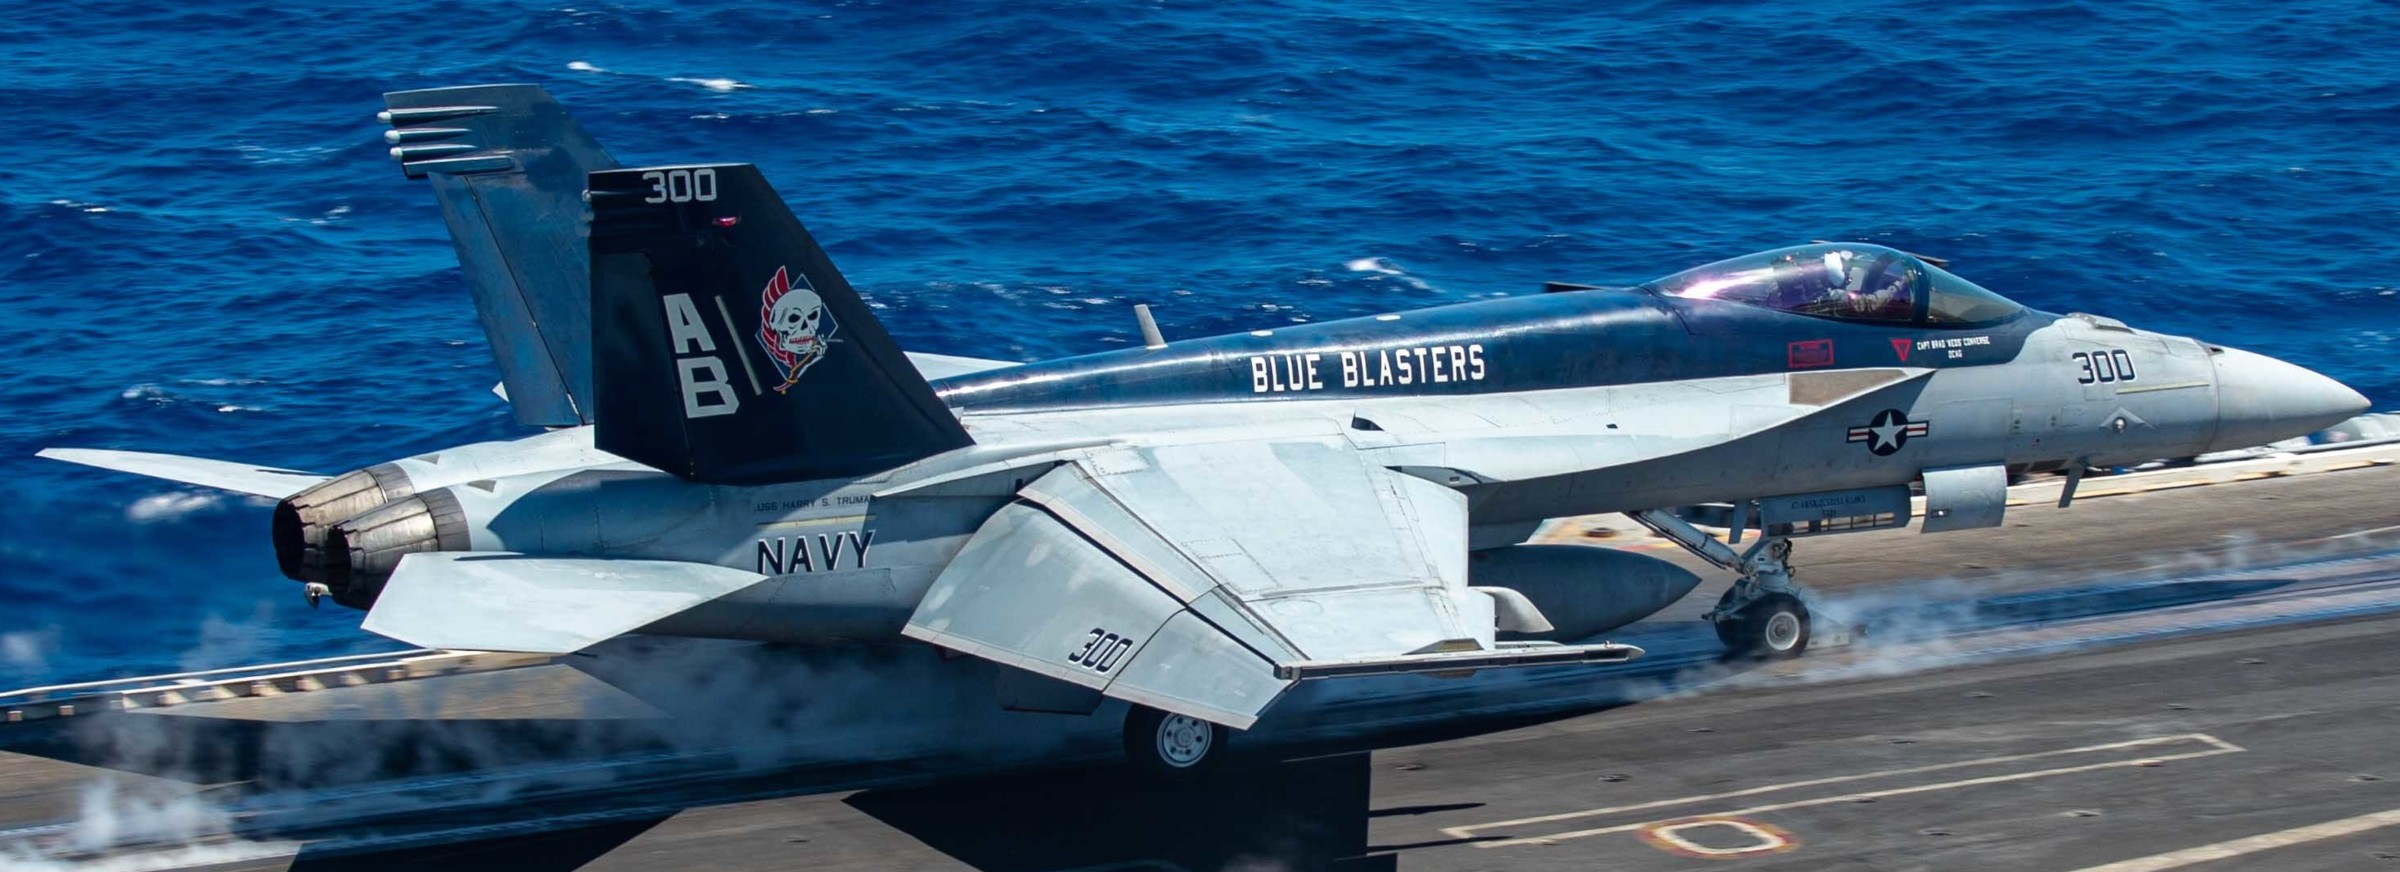 vfa-34 blue blasters strike fighter squadron f/a-18e super hornet cvn-75 uss harry s. truman cvw-8 us navy 104